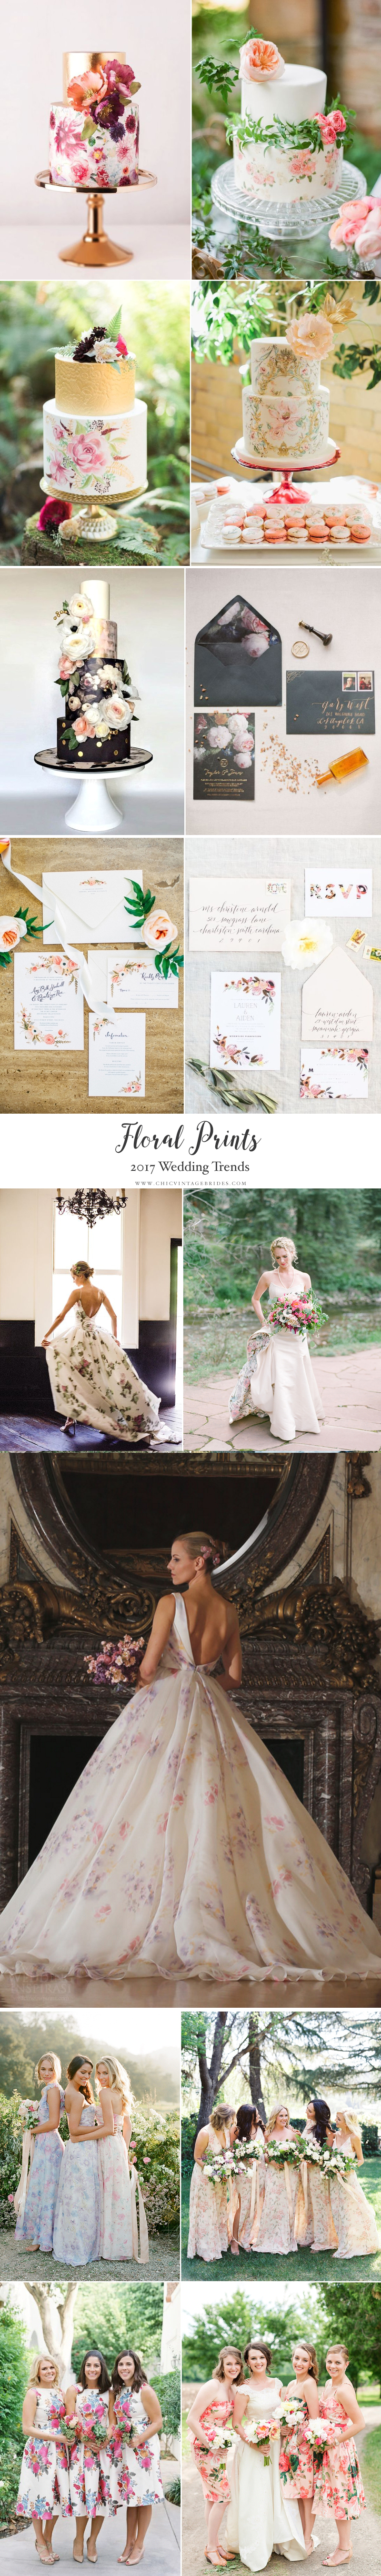 Top Wedding Trends 2017 - Floral Prints